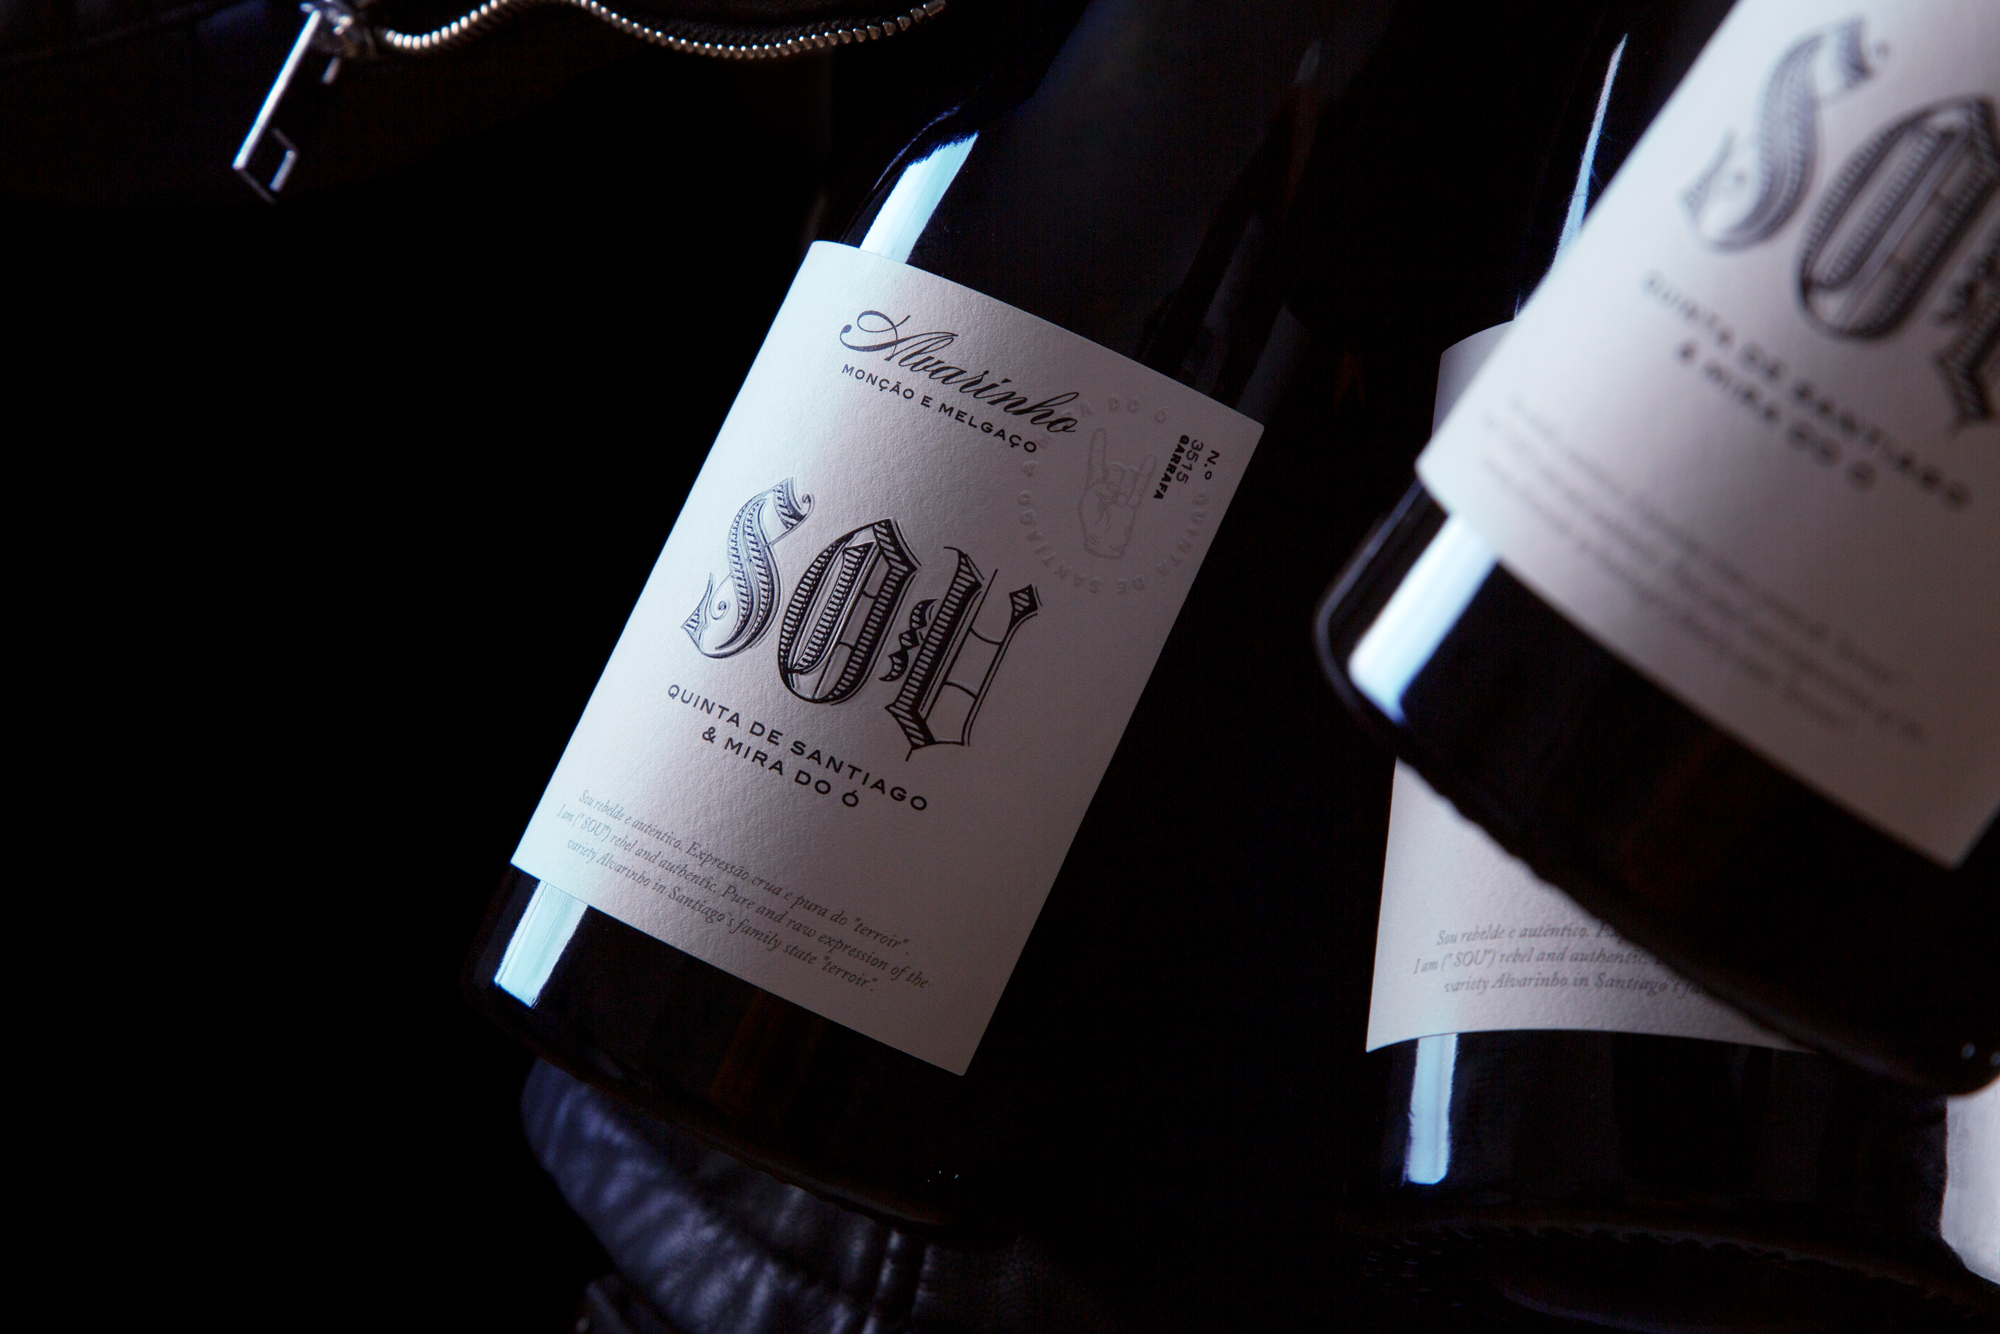 SOU Wine From Portugal by Moço Wine Branding